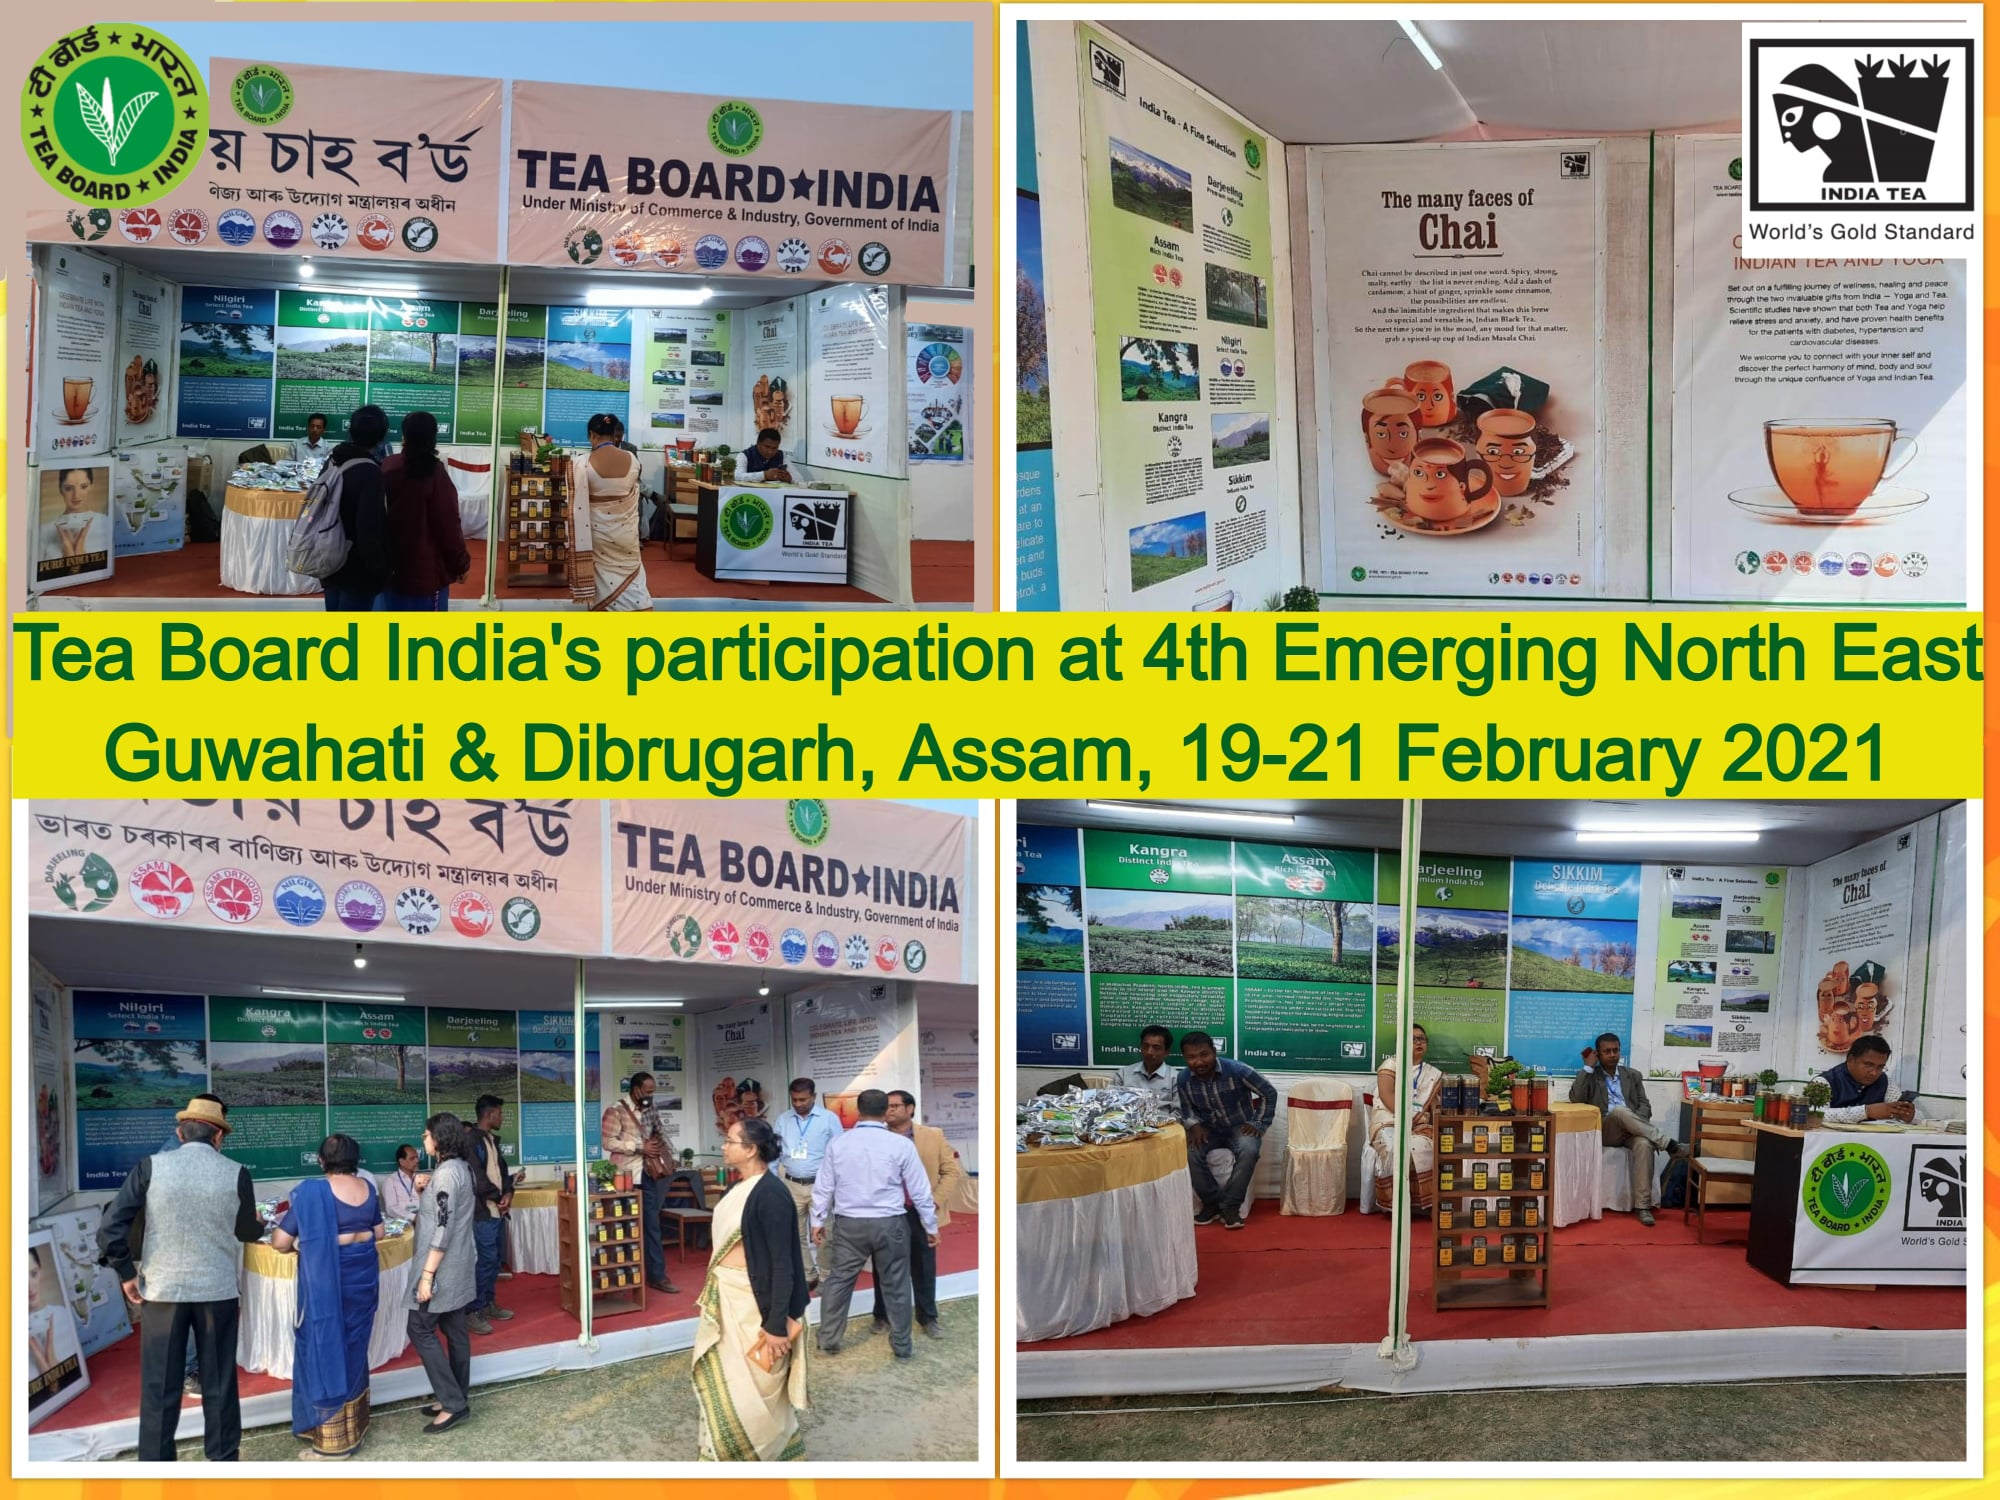 Tea Board India's participation at 4th Emerging North East Guwahati & Dibrugargh, Assam, 19-21 February 2021